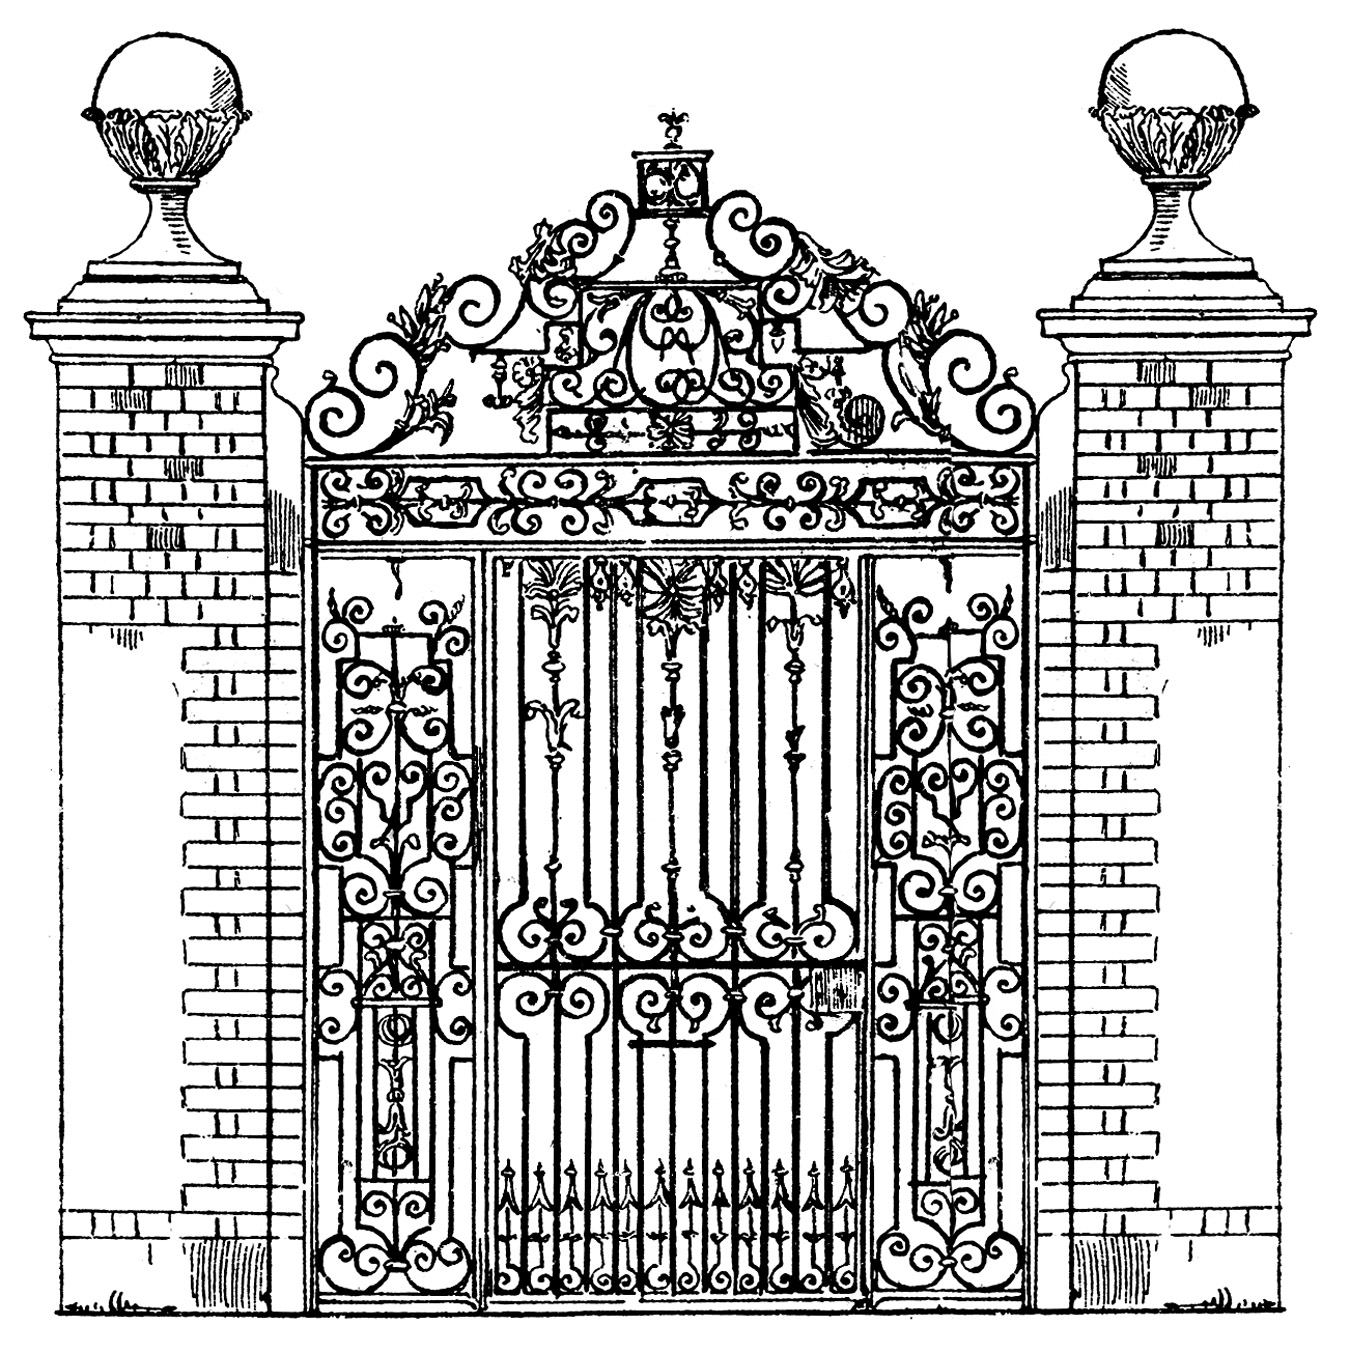 Vintage Clip Art   Ornate Iron Gate   Scrolls   The Graphics Fairy